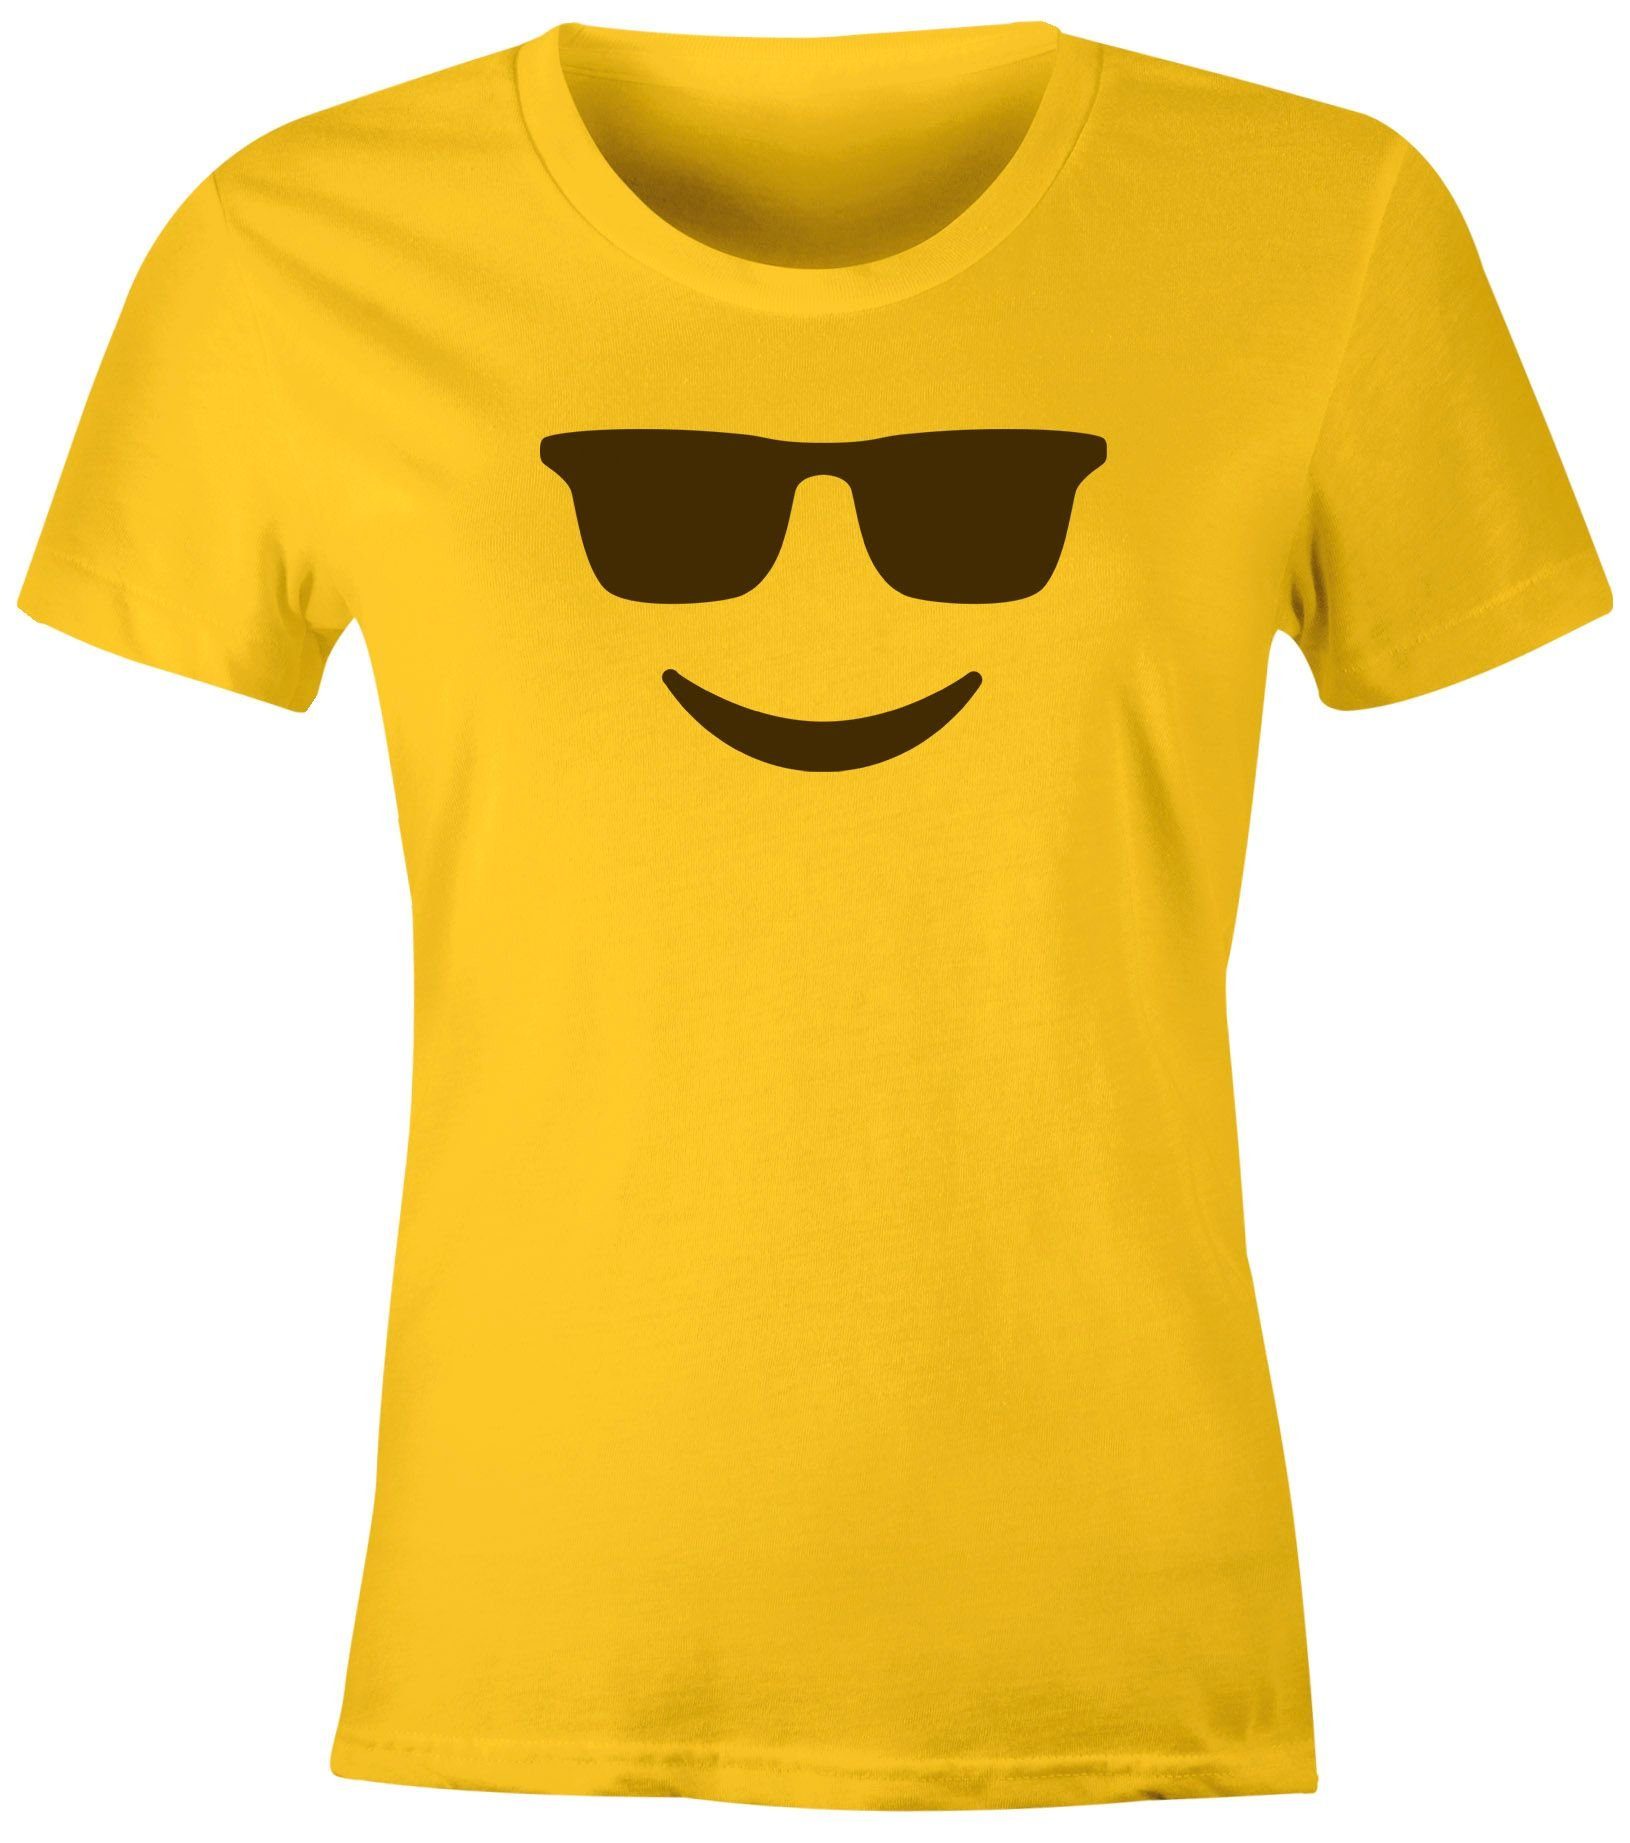 MoonWorks Print-Shirt Damen T-Shirt Emoticon Gruppenkostüm Fasching Karneval Junggesellenabschied JGA lustig Fun-Shirt Moonworks® mit Print Sonnenbrille gelb